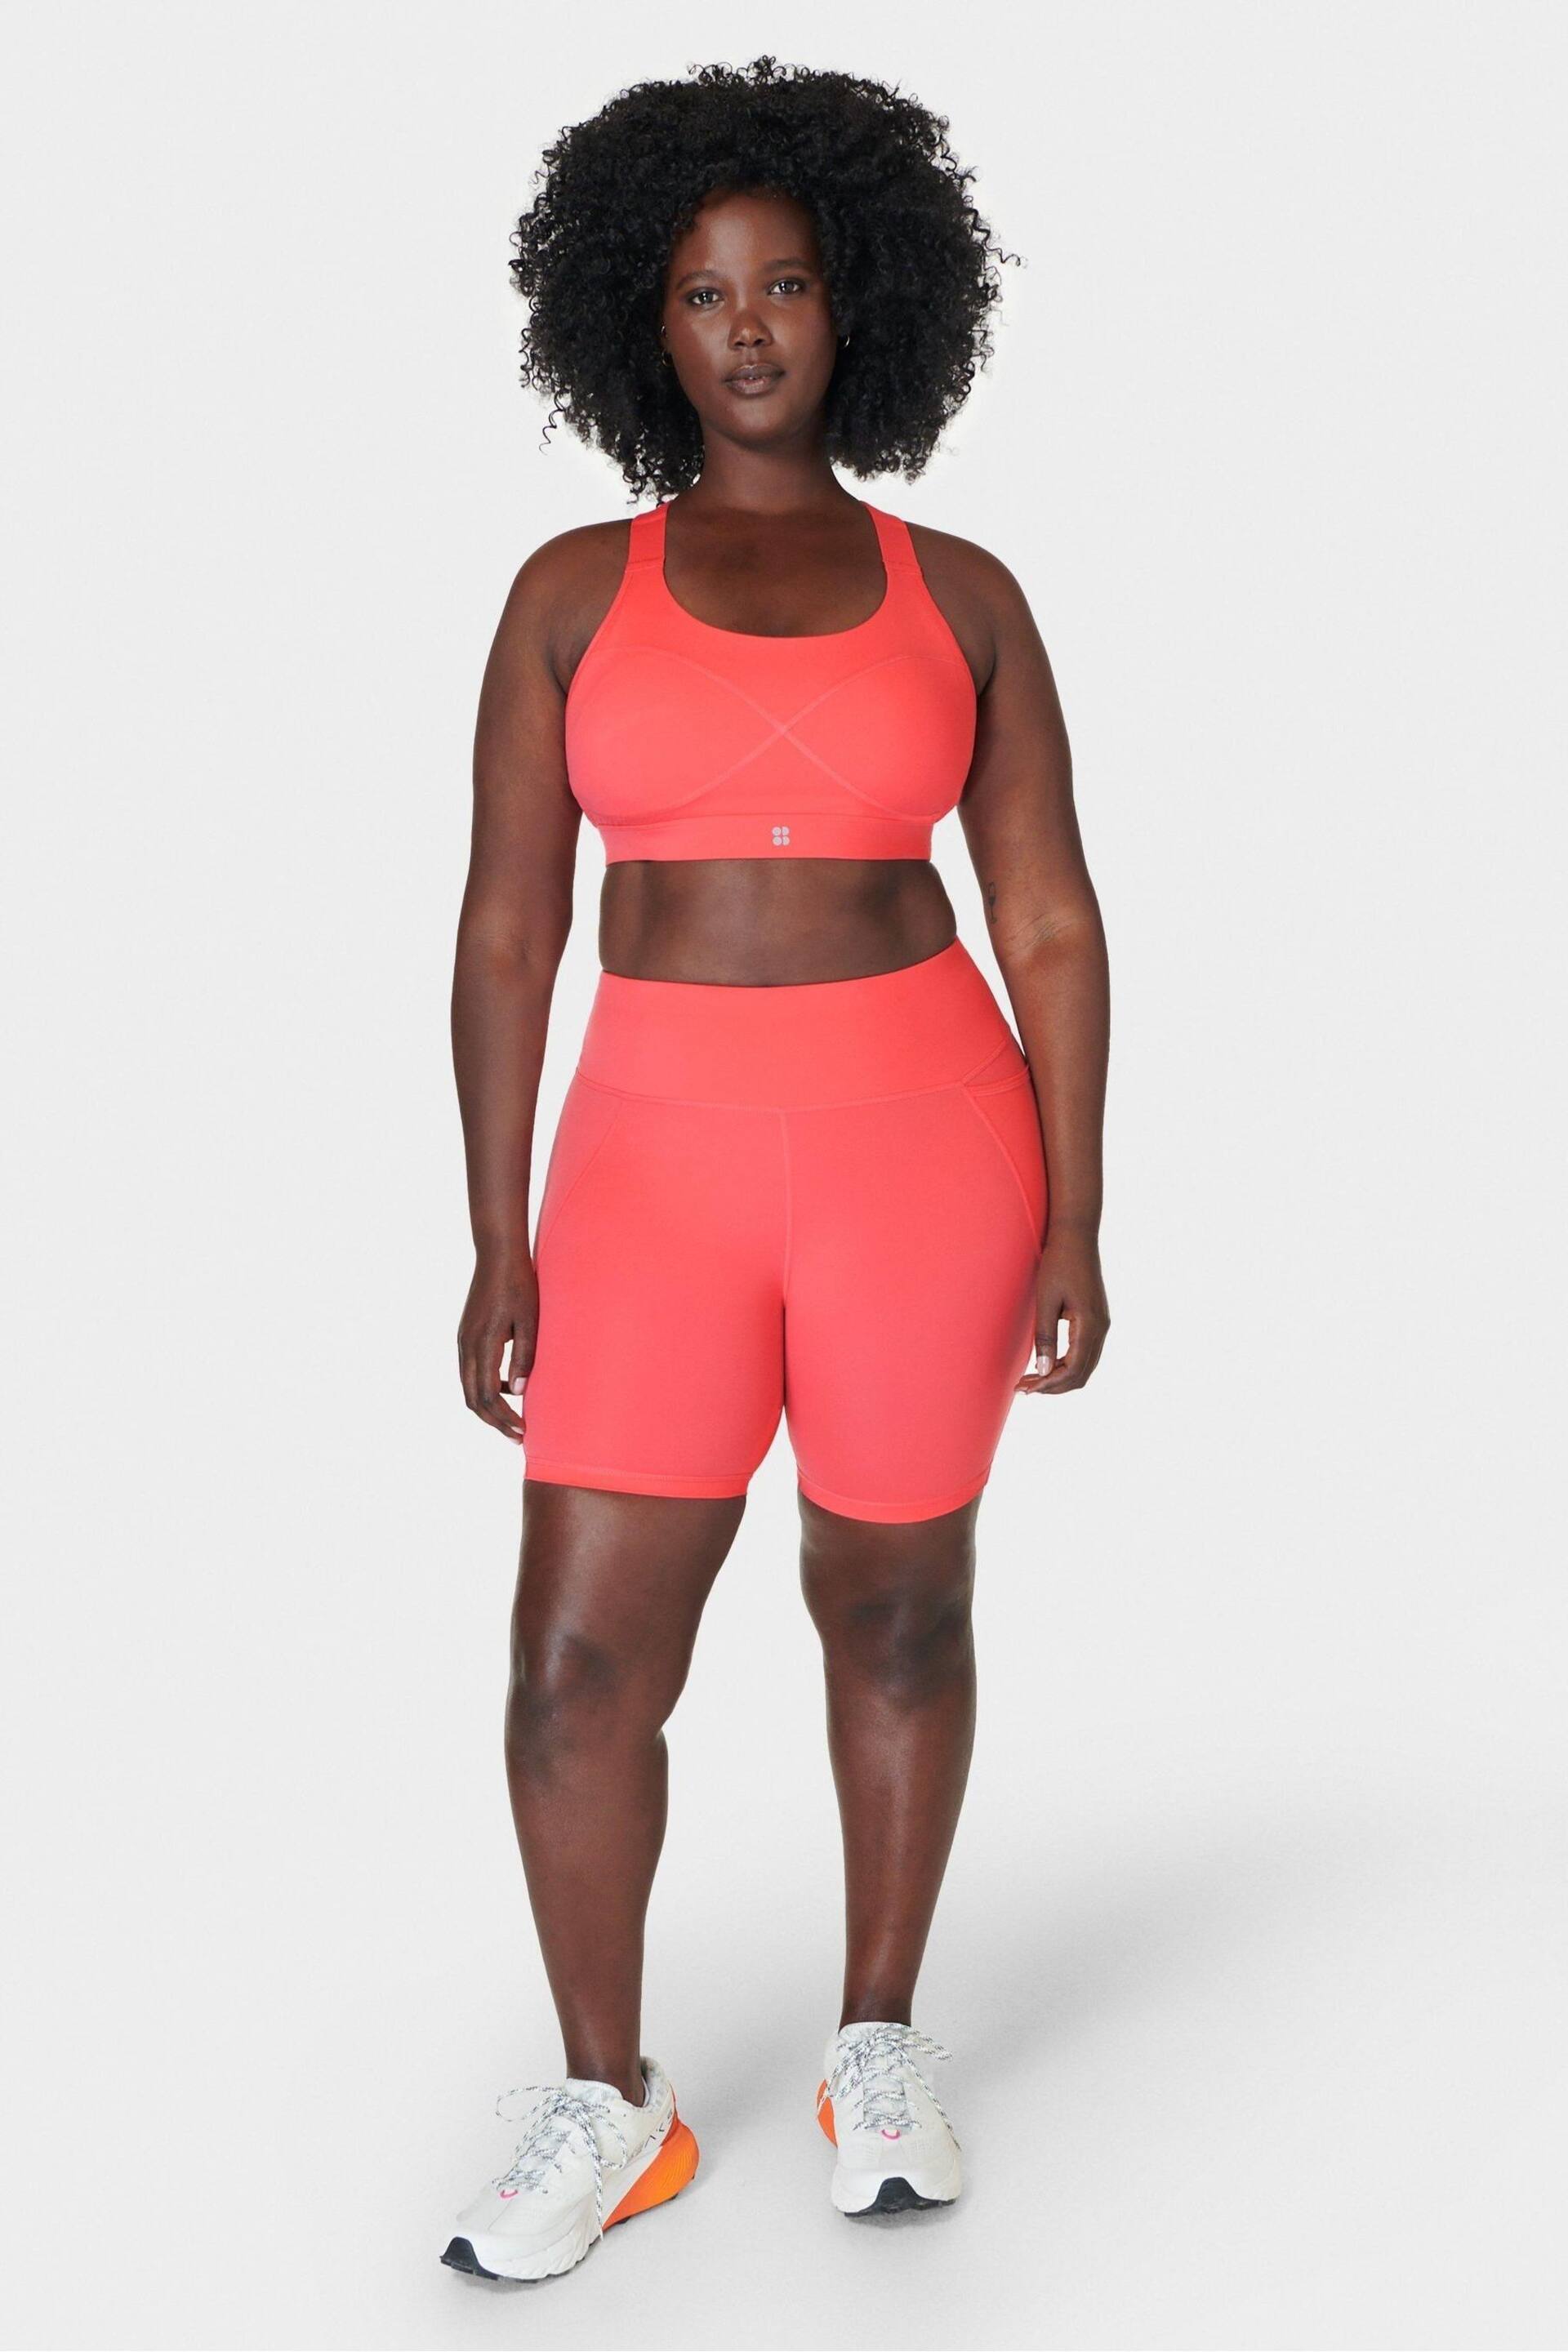 Sweaty Betty Coral Pink Medium Power Support Sports Bra - Image 4 of 6